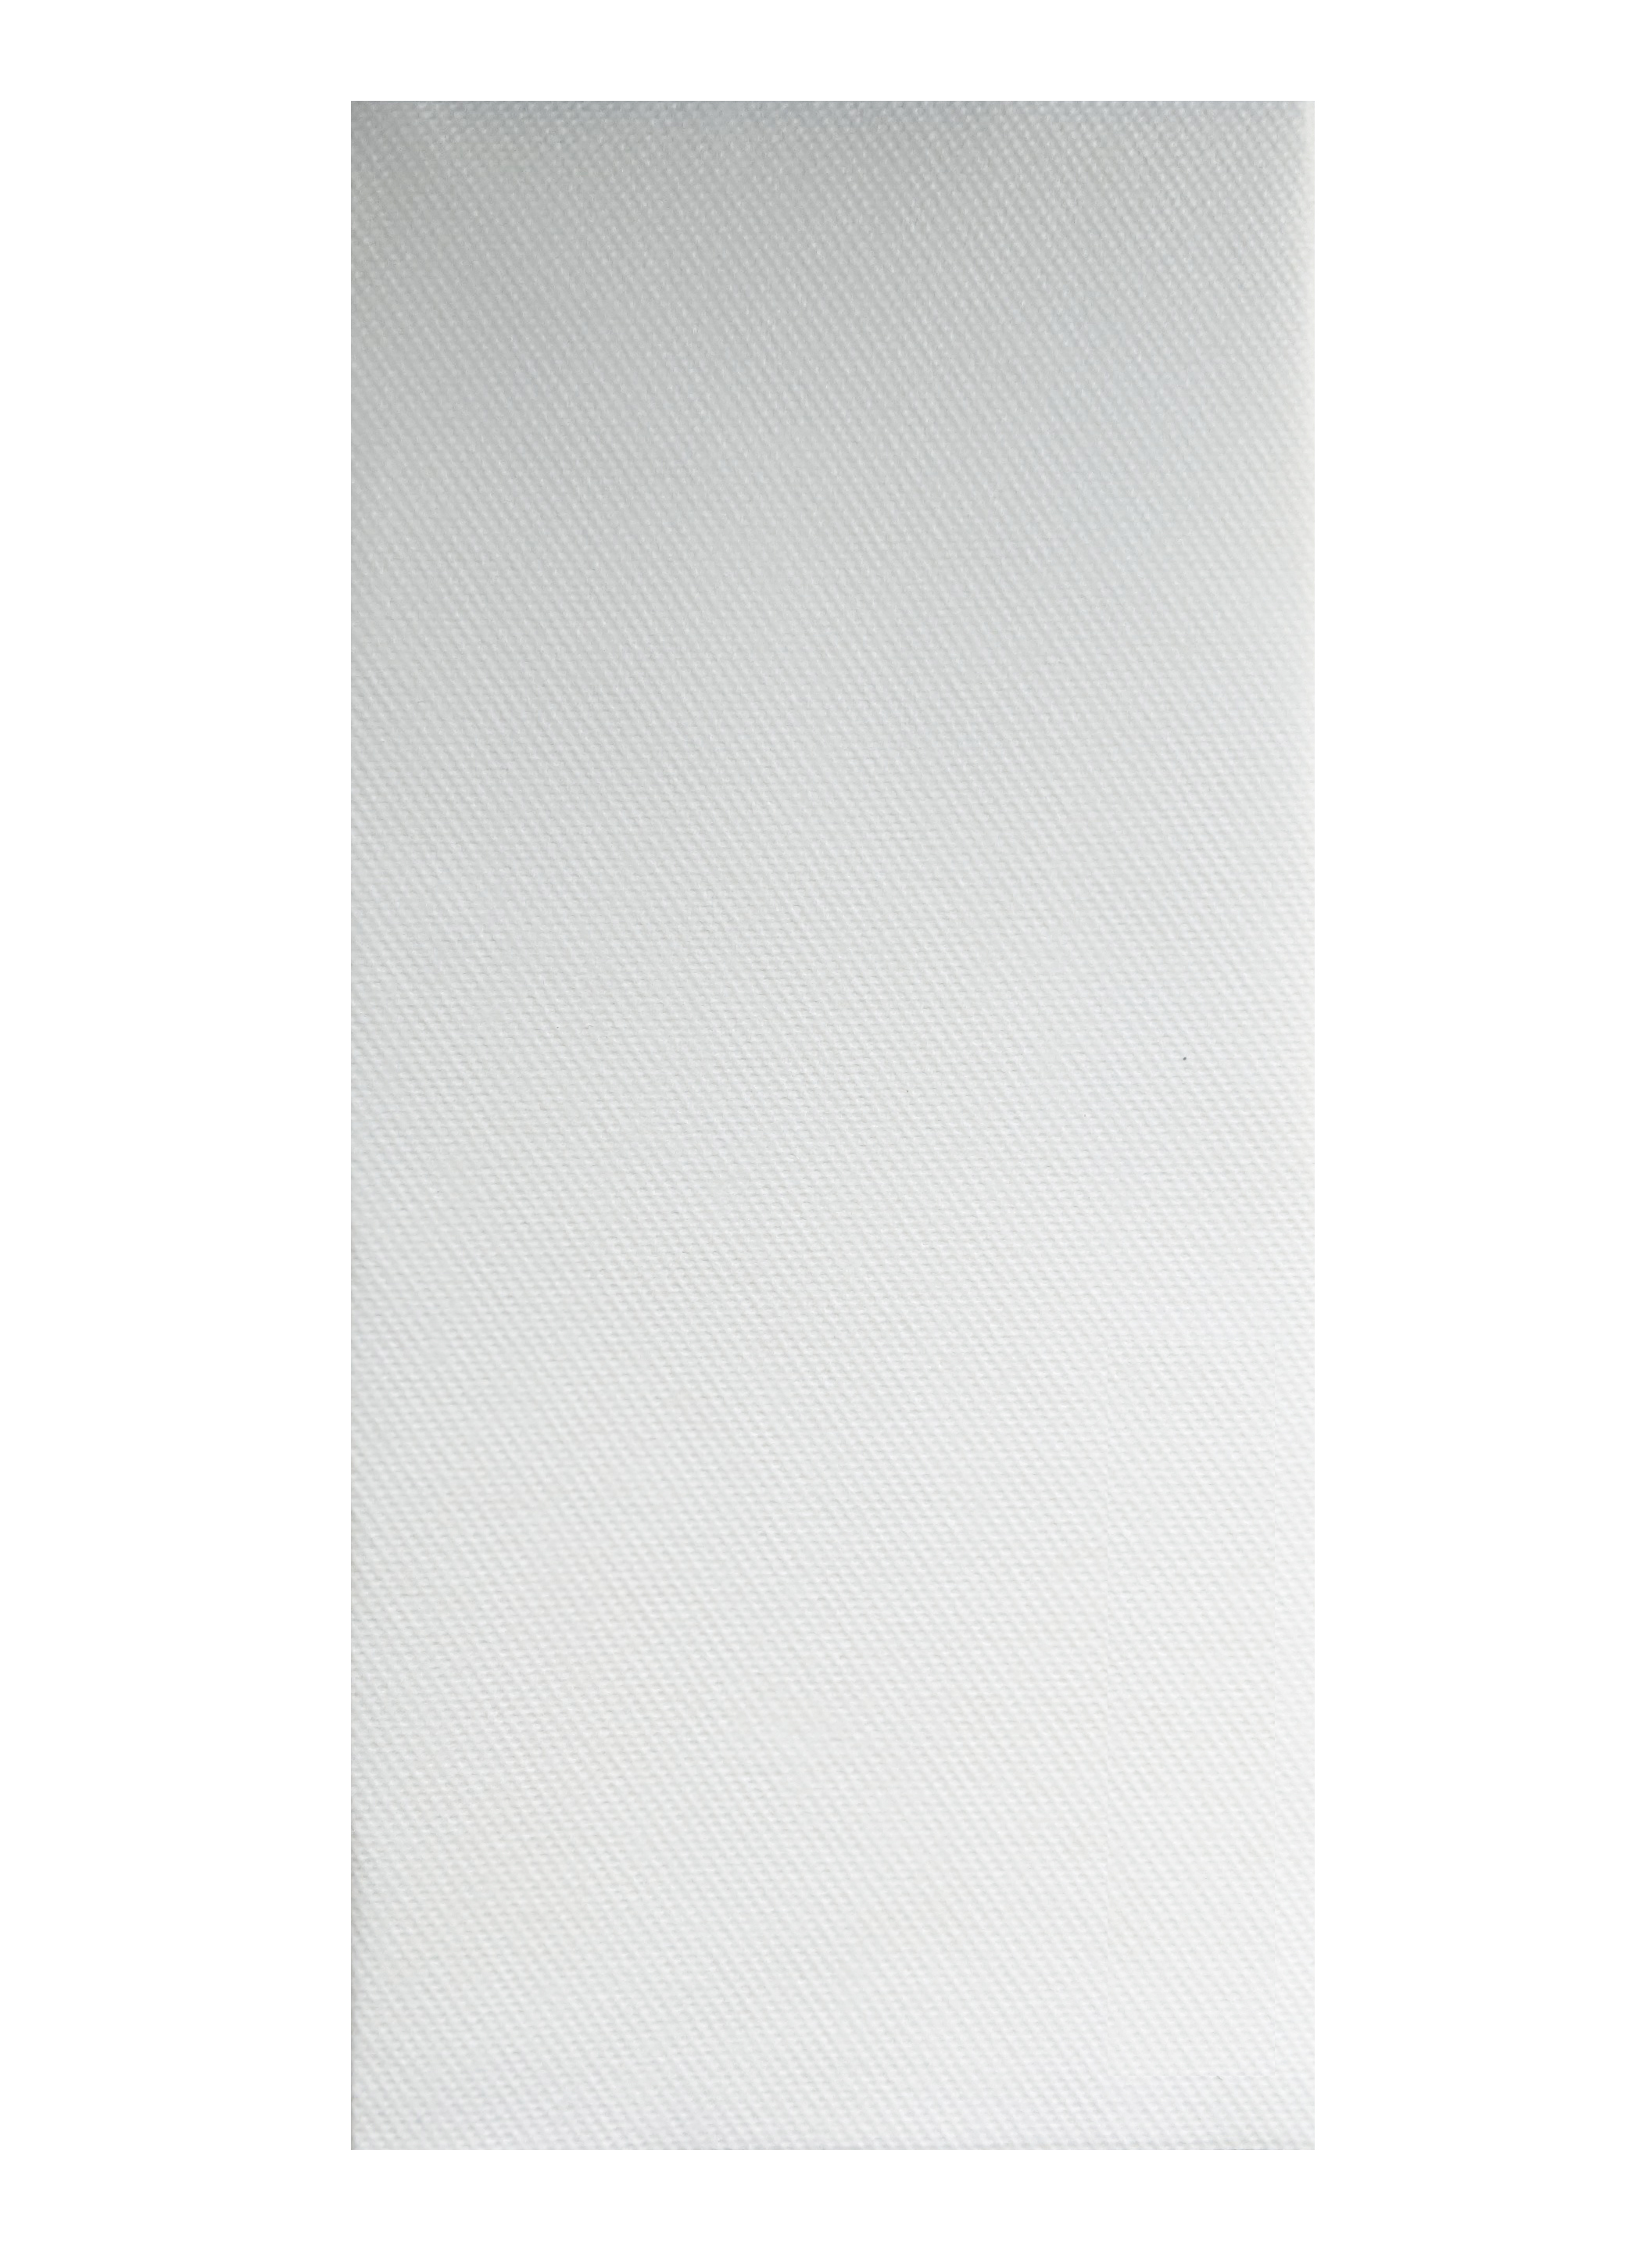 49910 Servet airlaid wit 8-vouw 8x225st